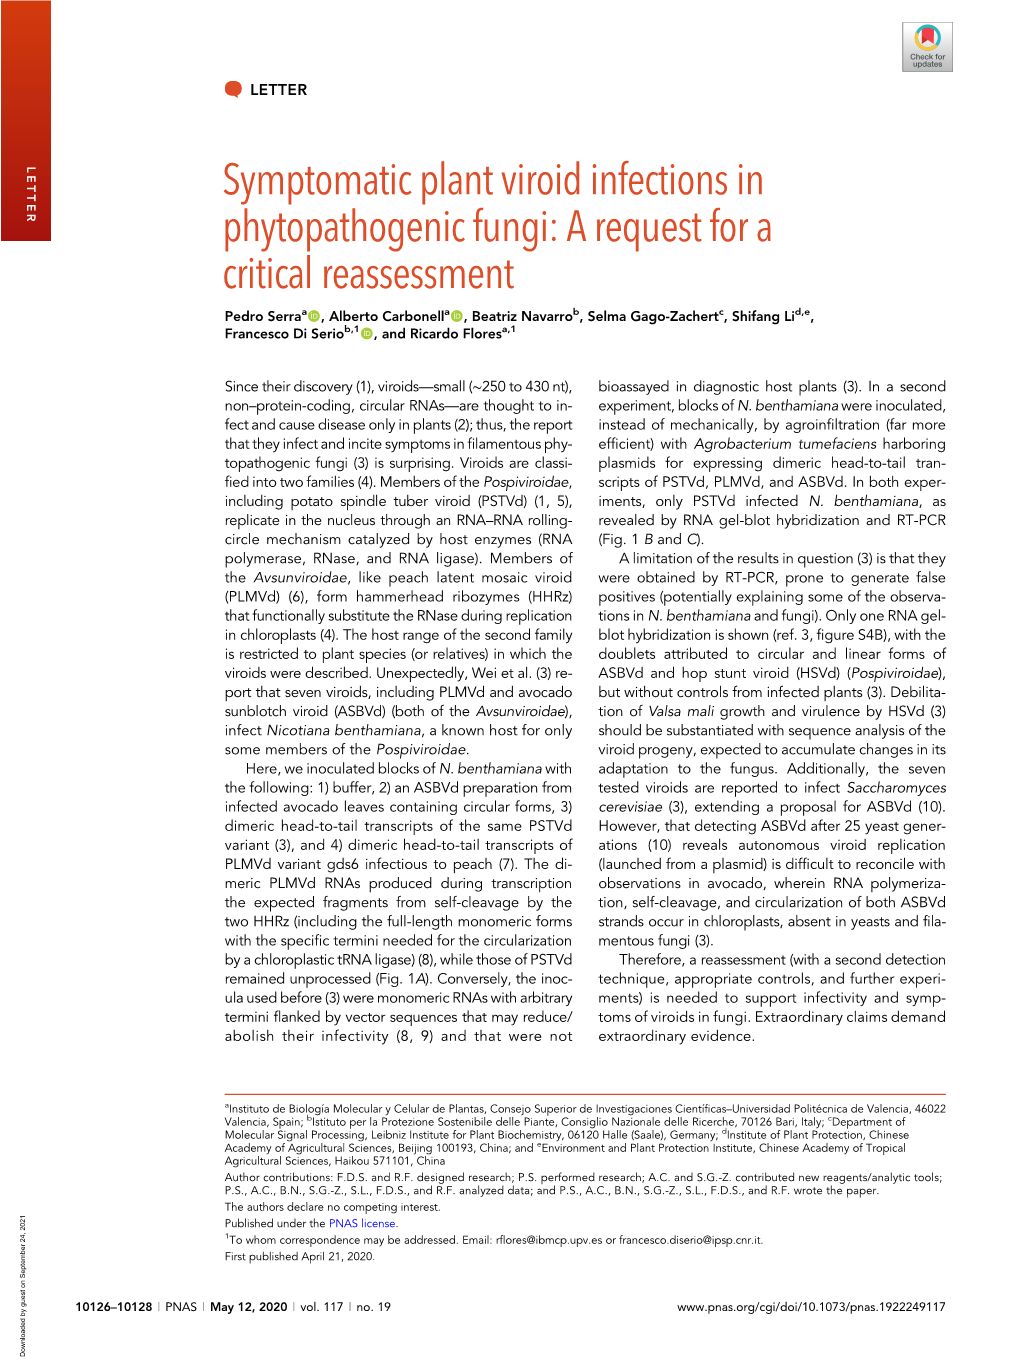 Symptomatic Plant Viroid Infections in Phytopathogenic Fungi